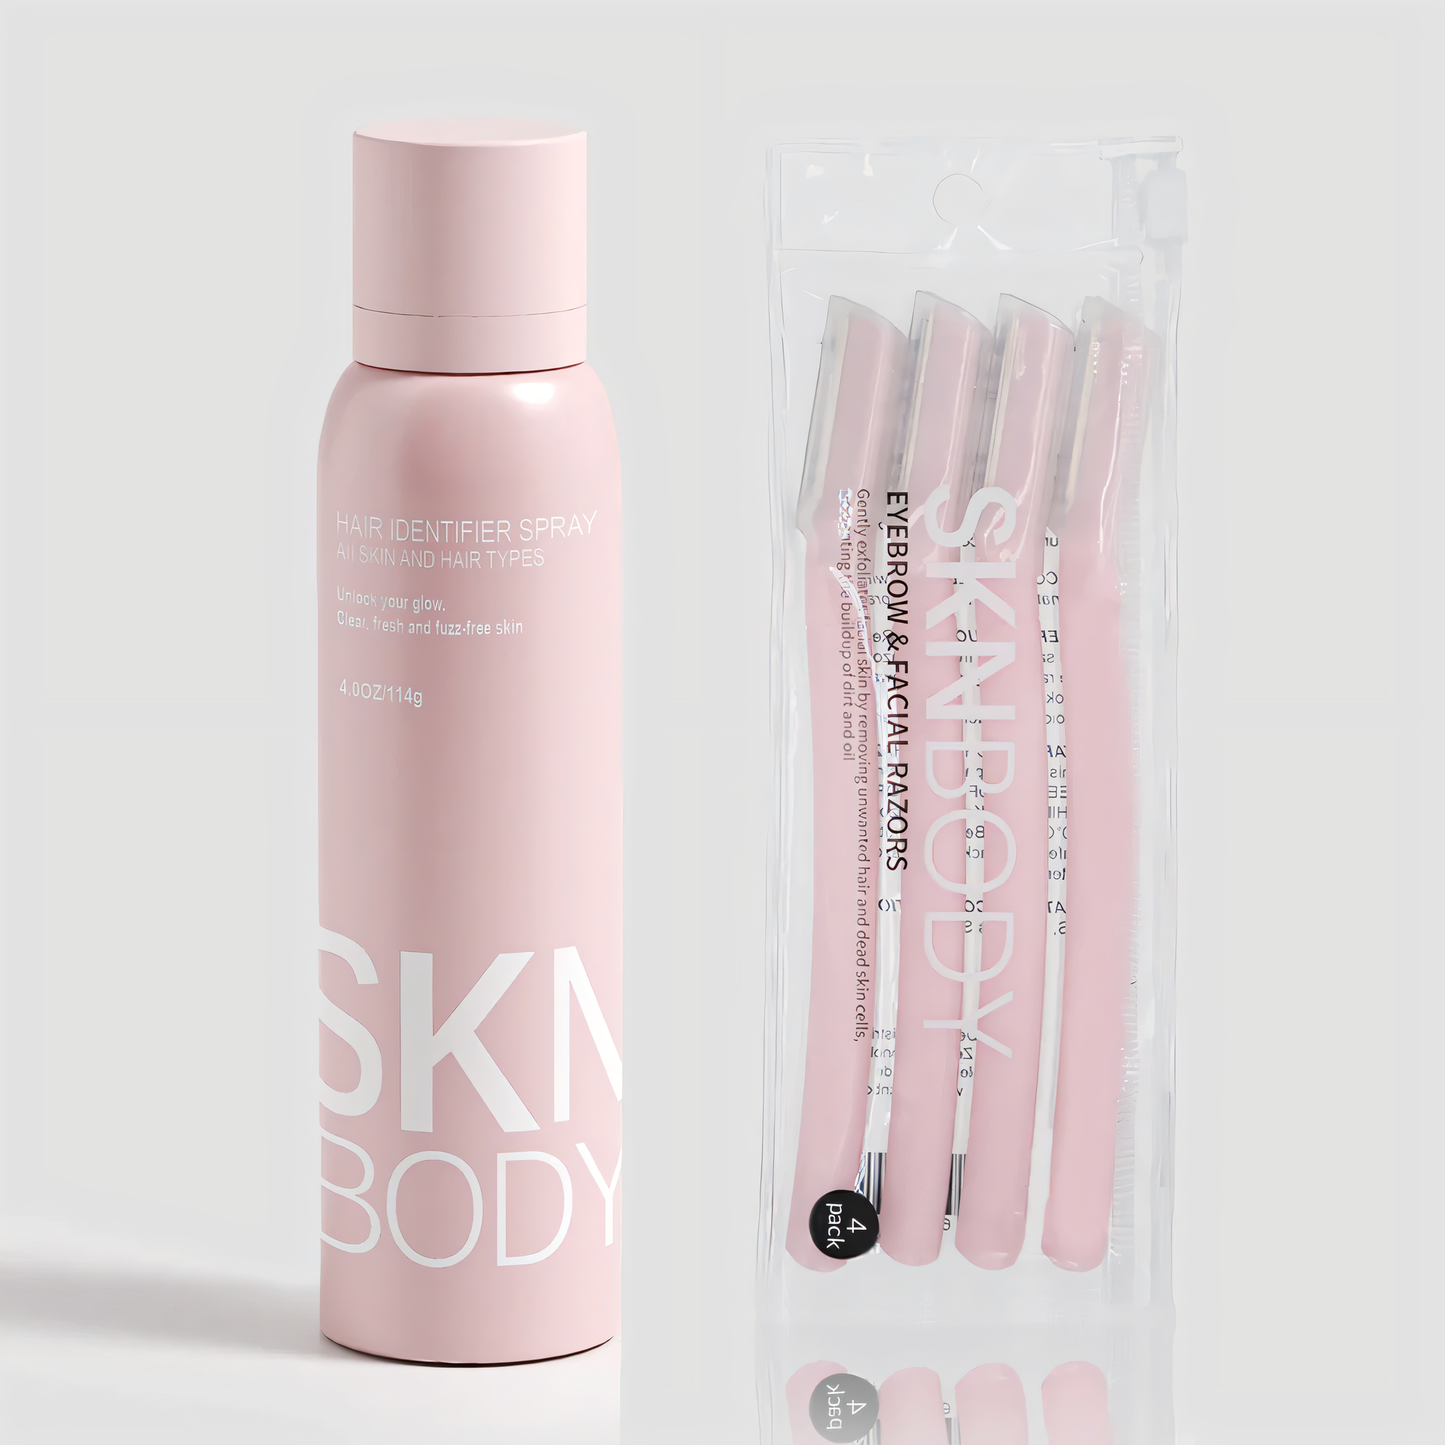 Sknbody™ - Hair Identifier Spray